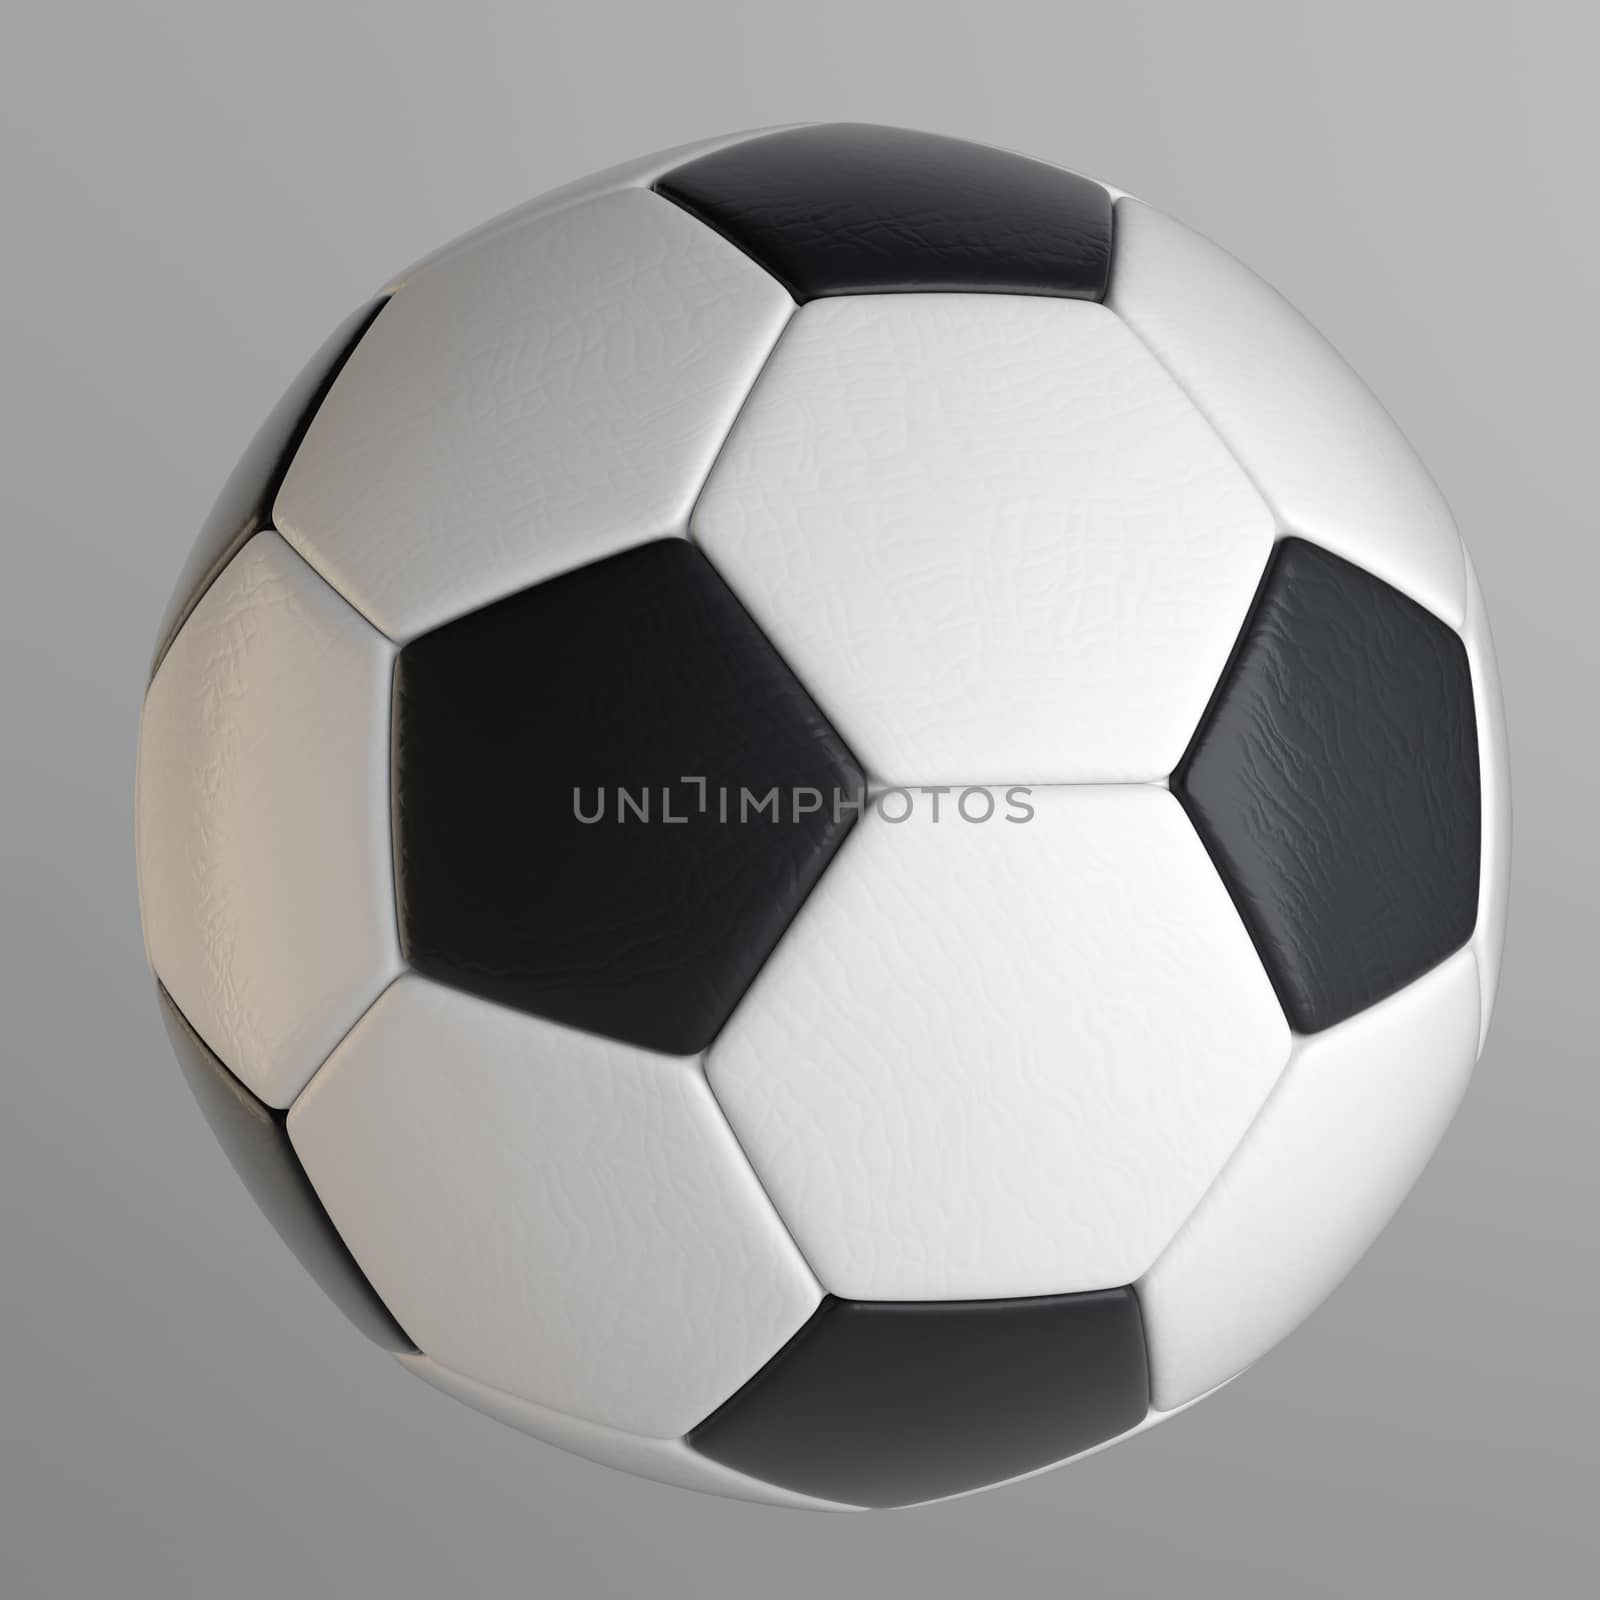 Classic soccer ball by cherezoff